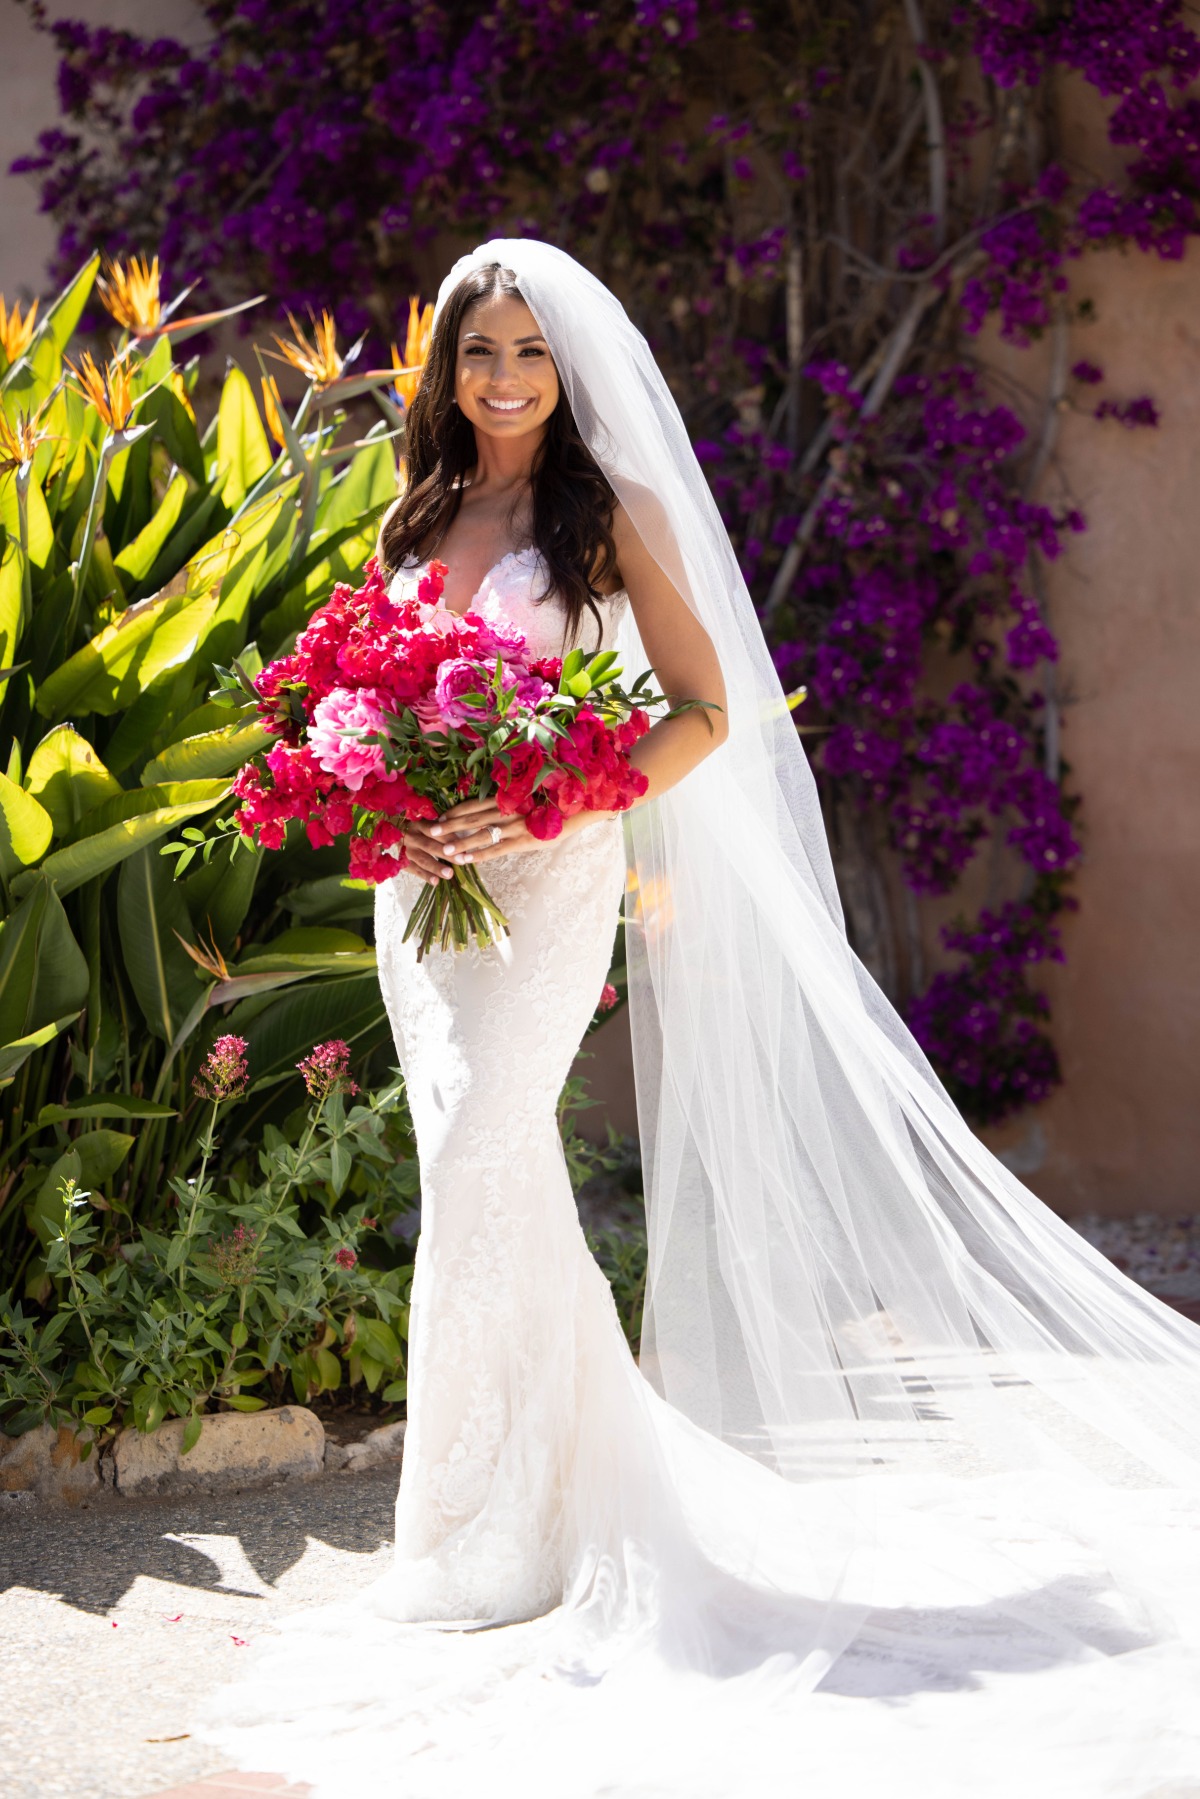 Bride with vibrant magenta bouquet